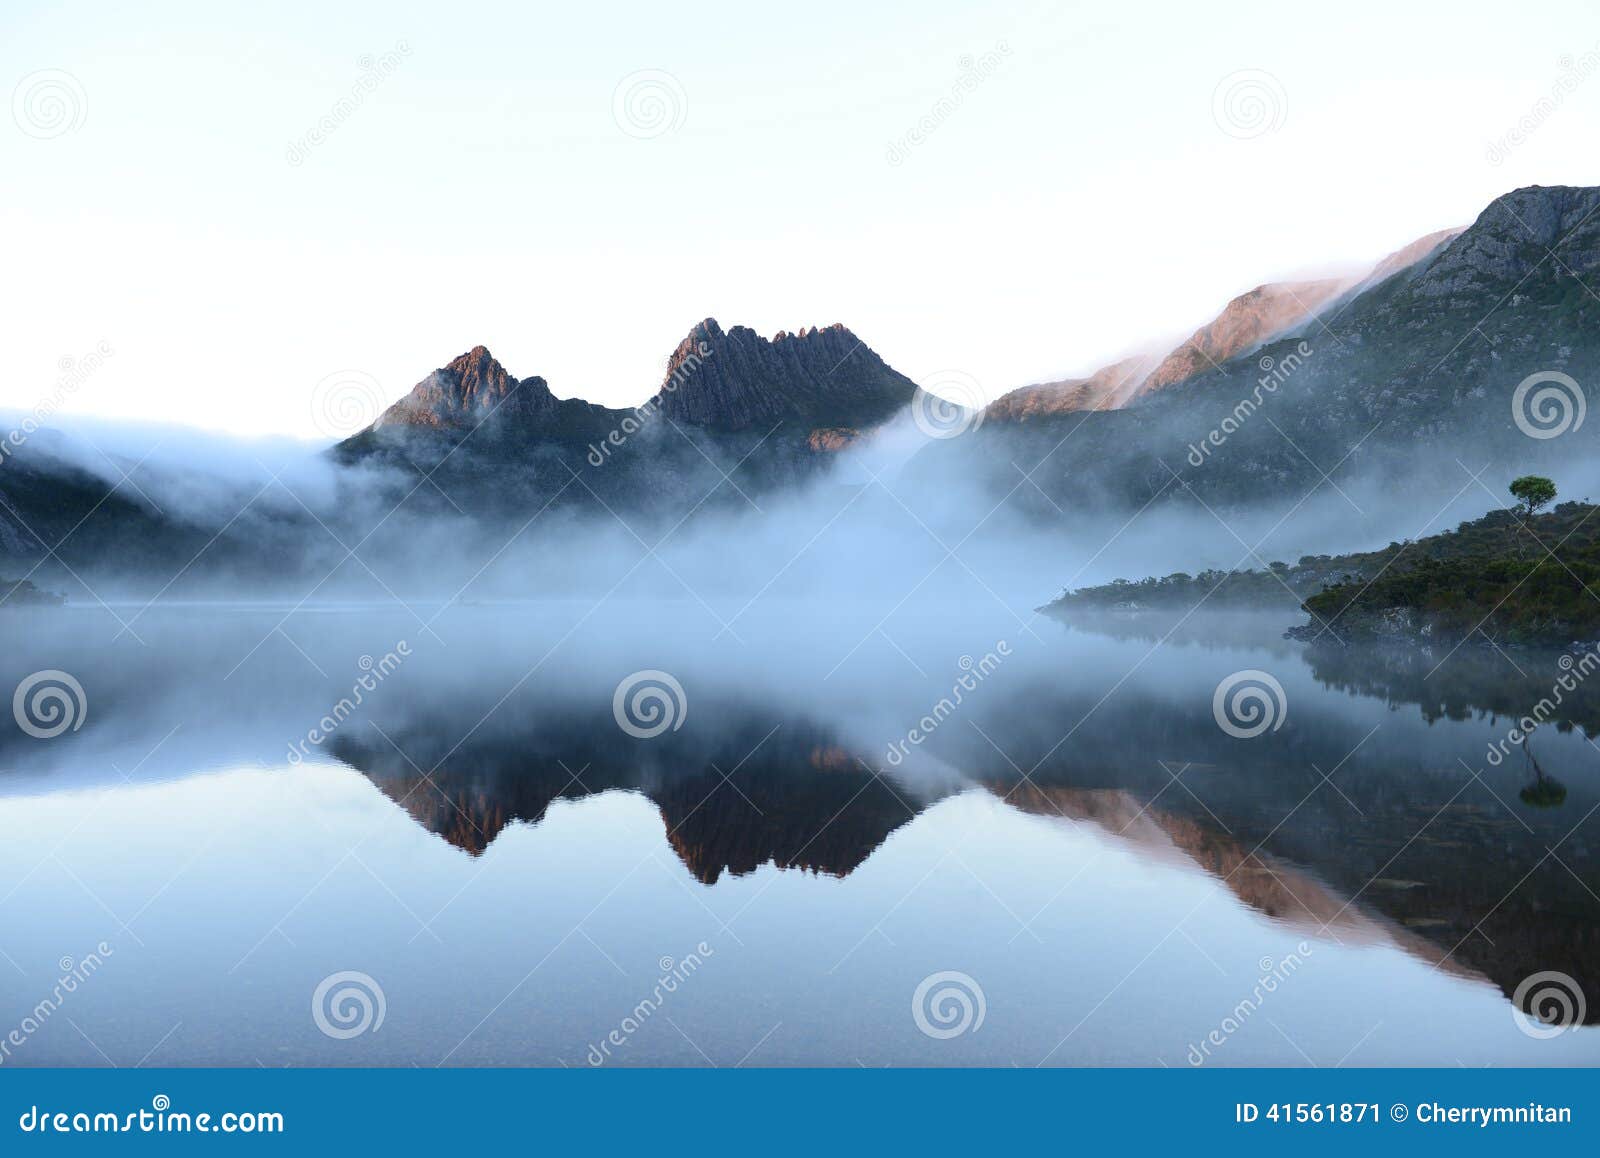 cradle mountain during morning at dove lake